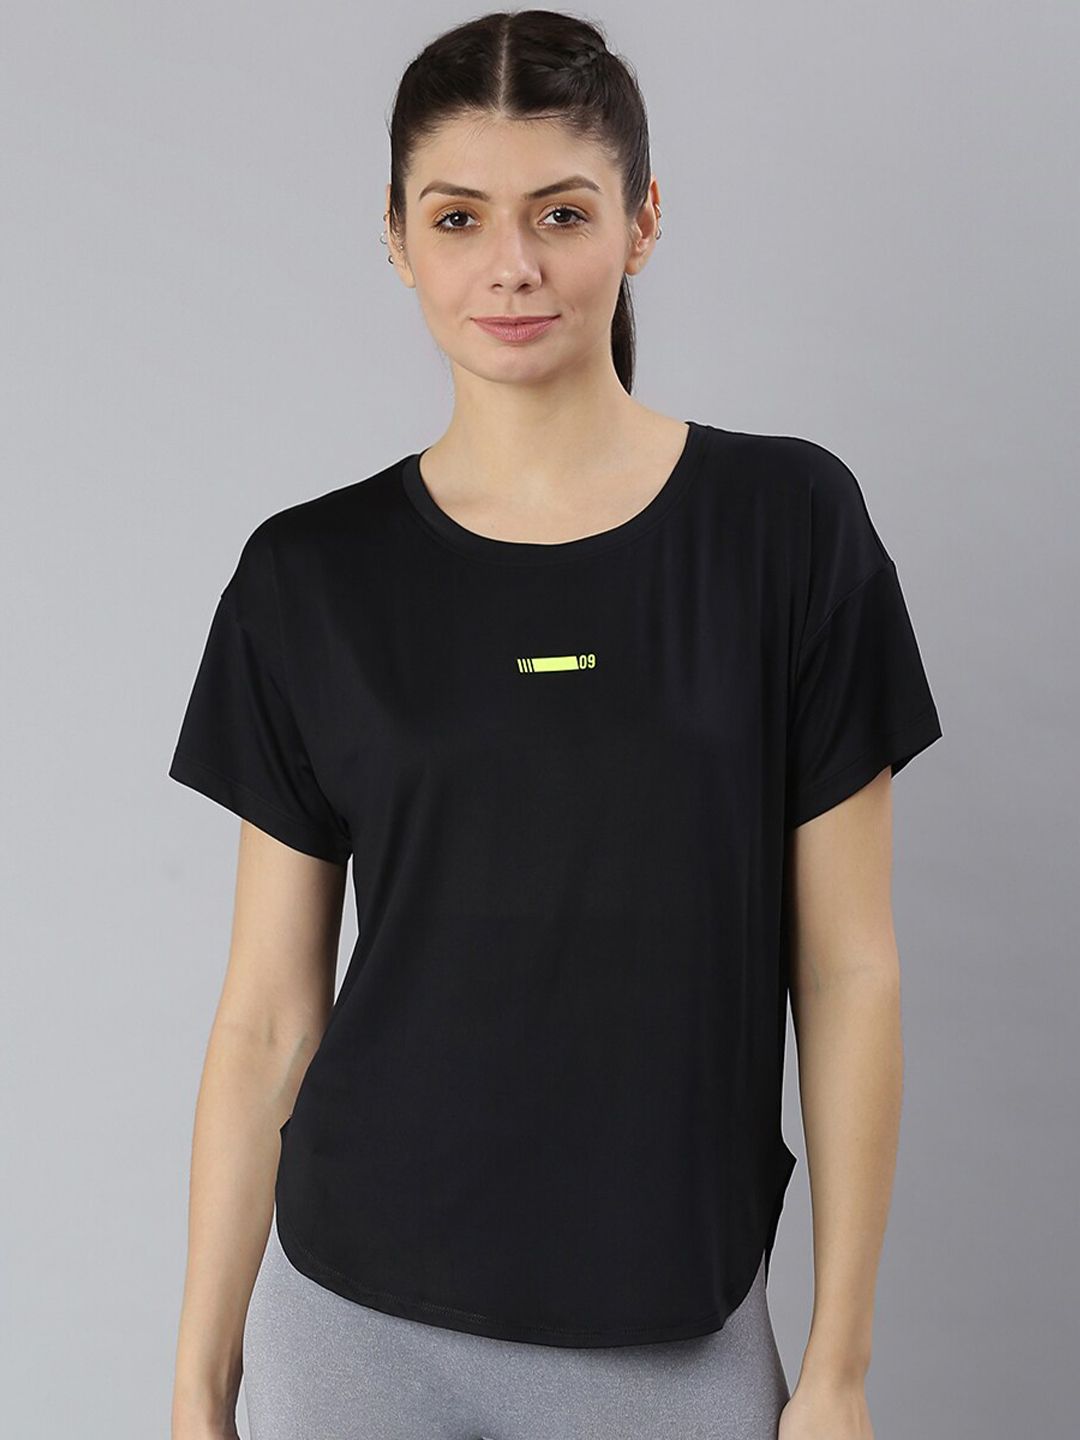 MKH Women Black Dri-FIT T-shirt Price in India